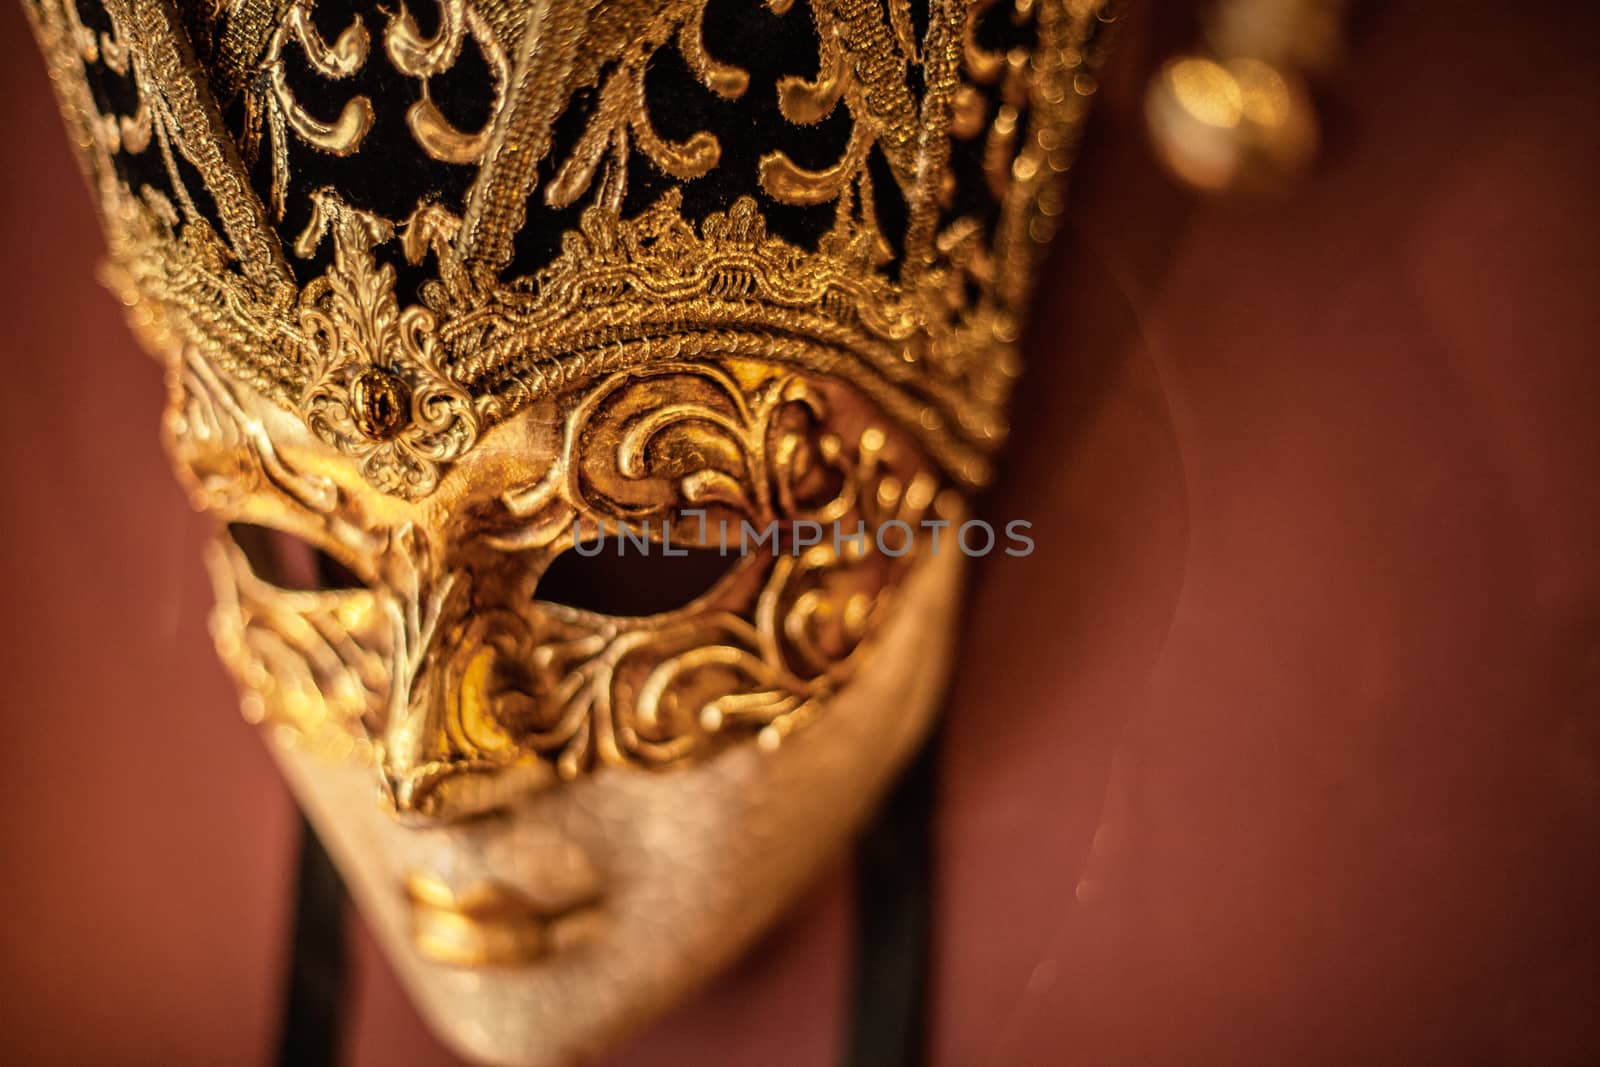 Venice Mask Shallow Depth Of Focus